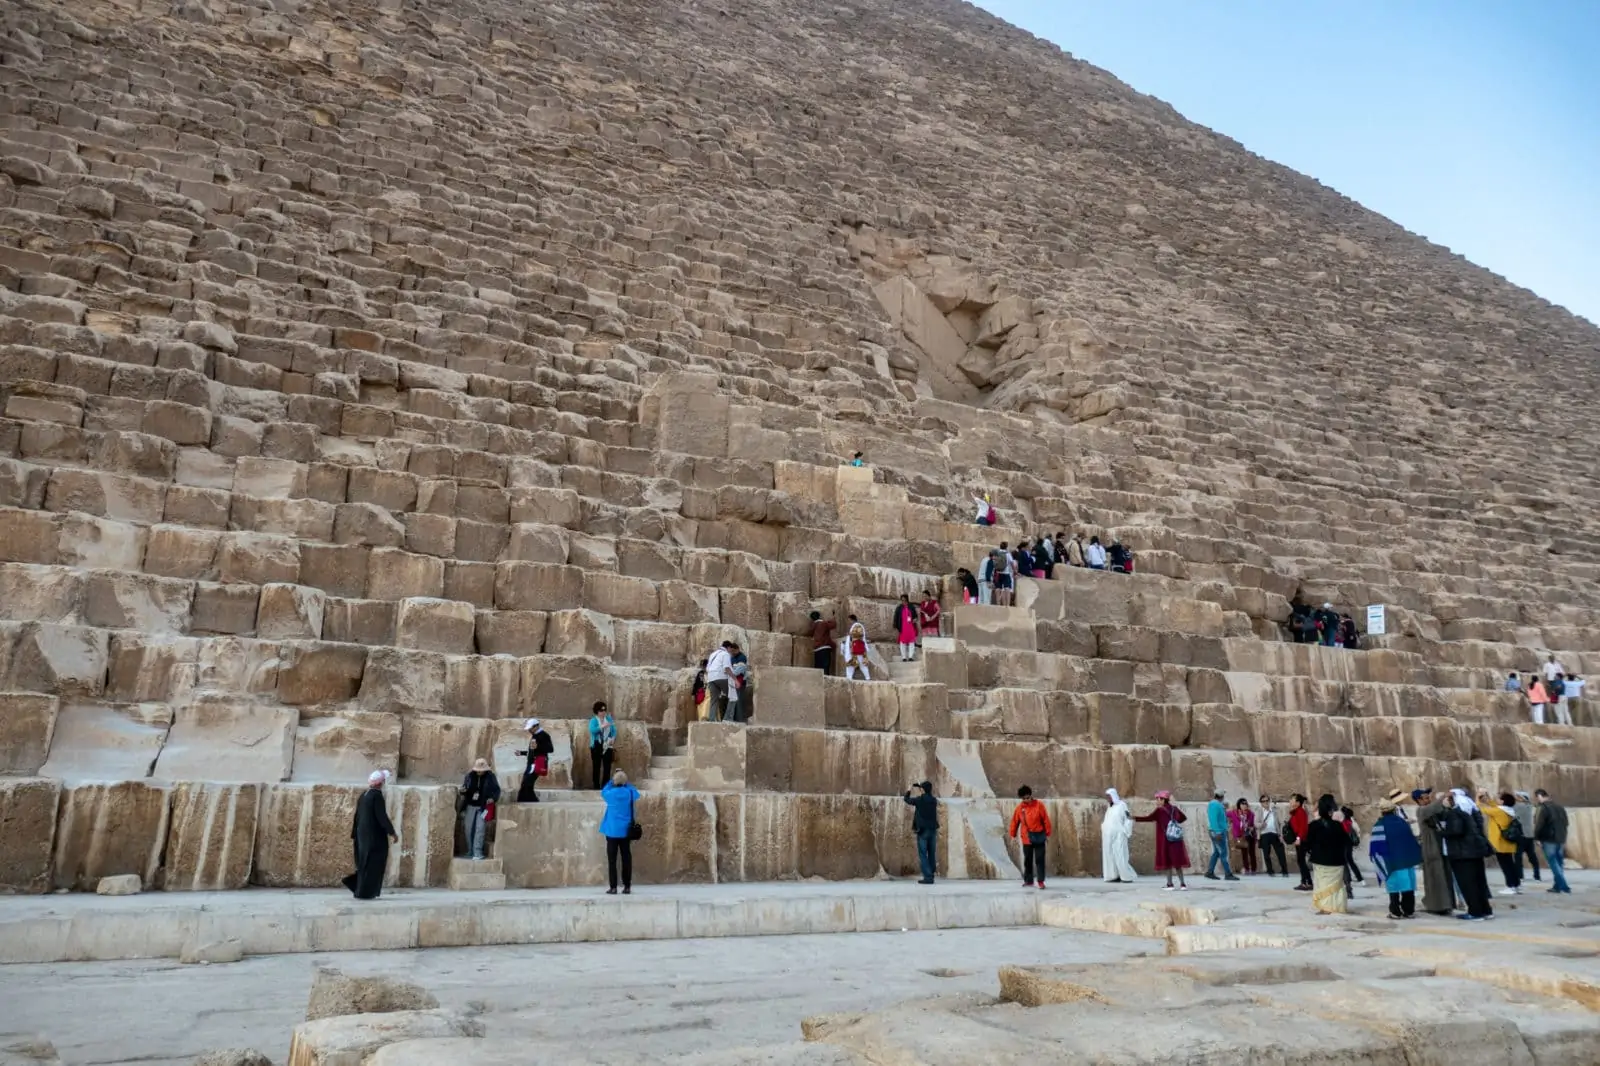 People Climbing the Pyramid